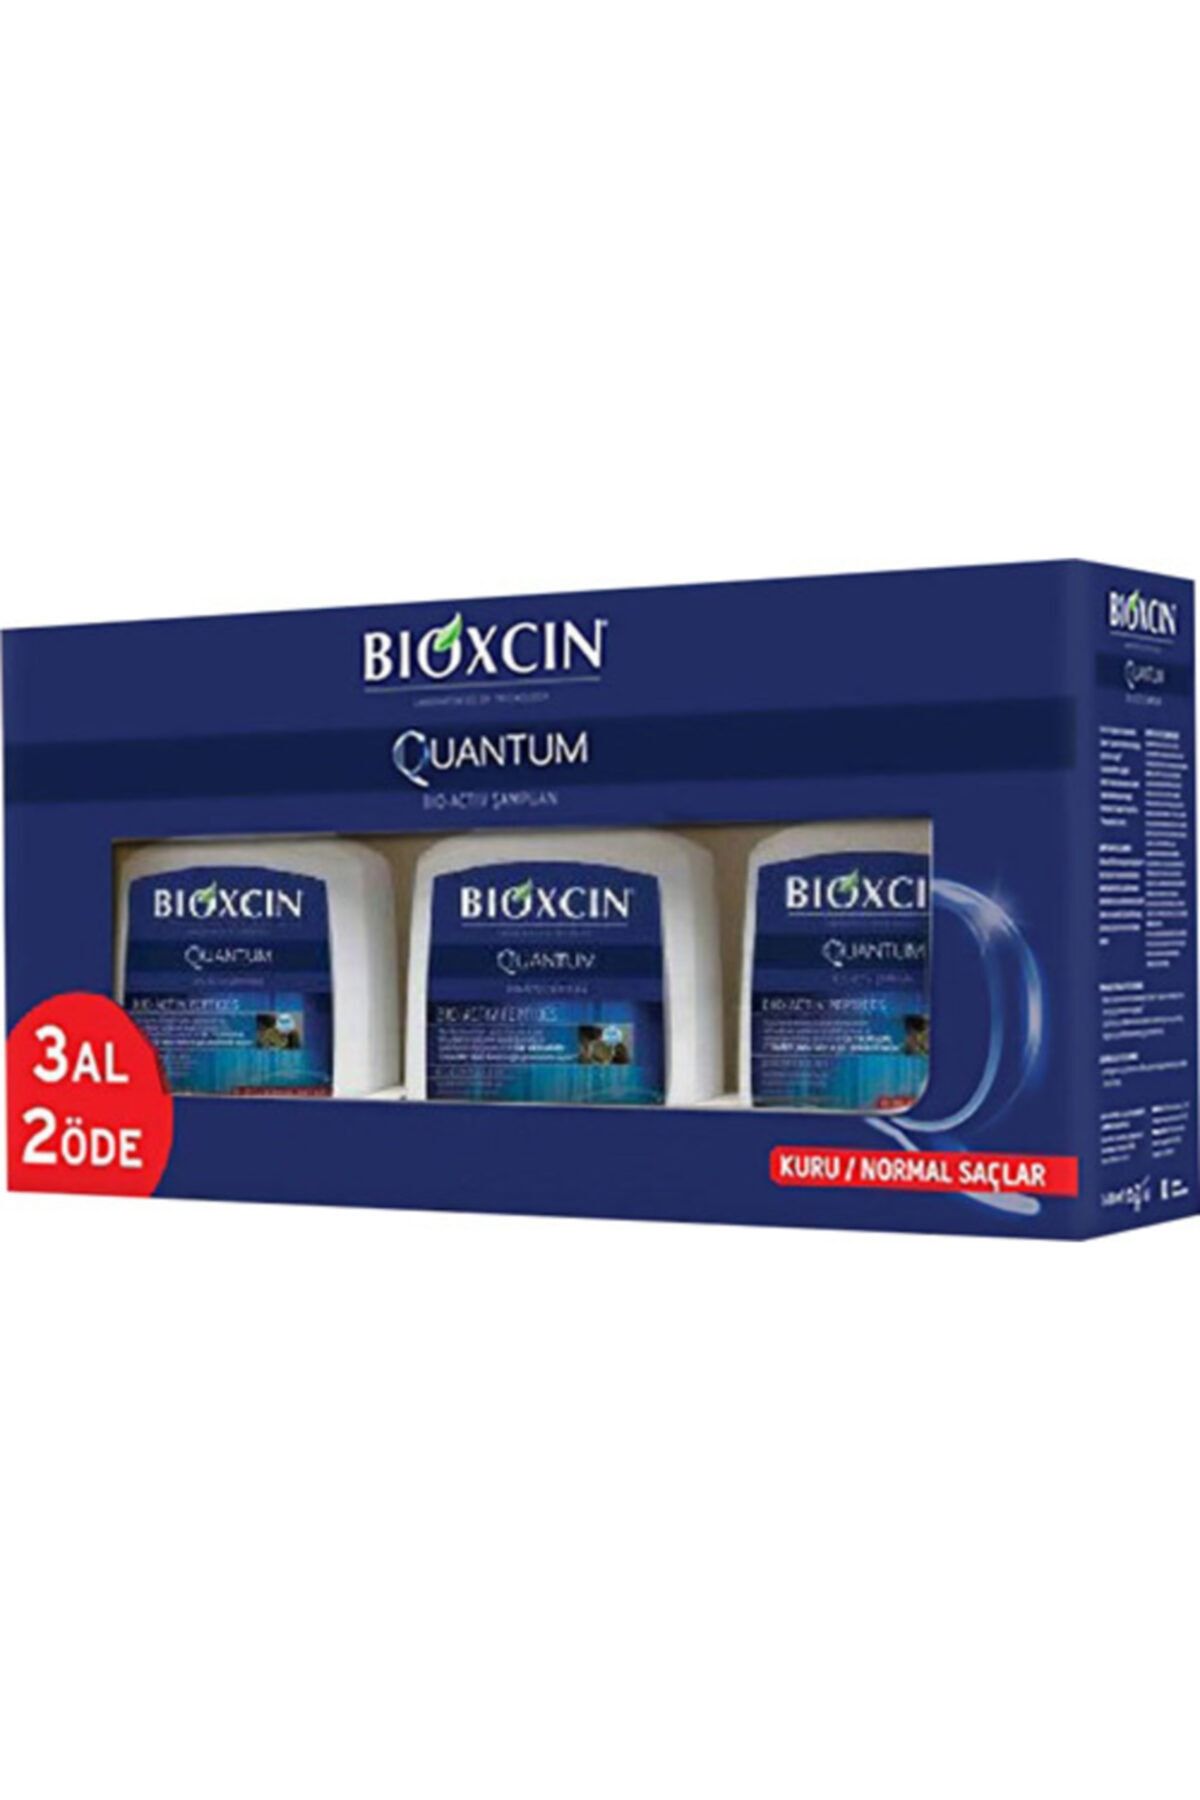 Bioxin Bıoxcın Quantum 3 Al 2 Öde